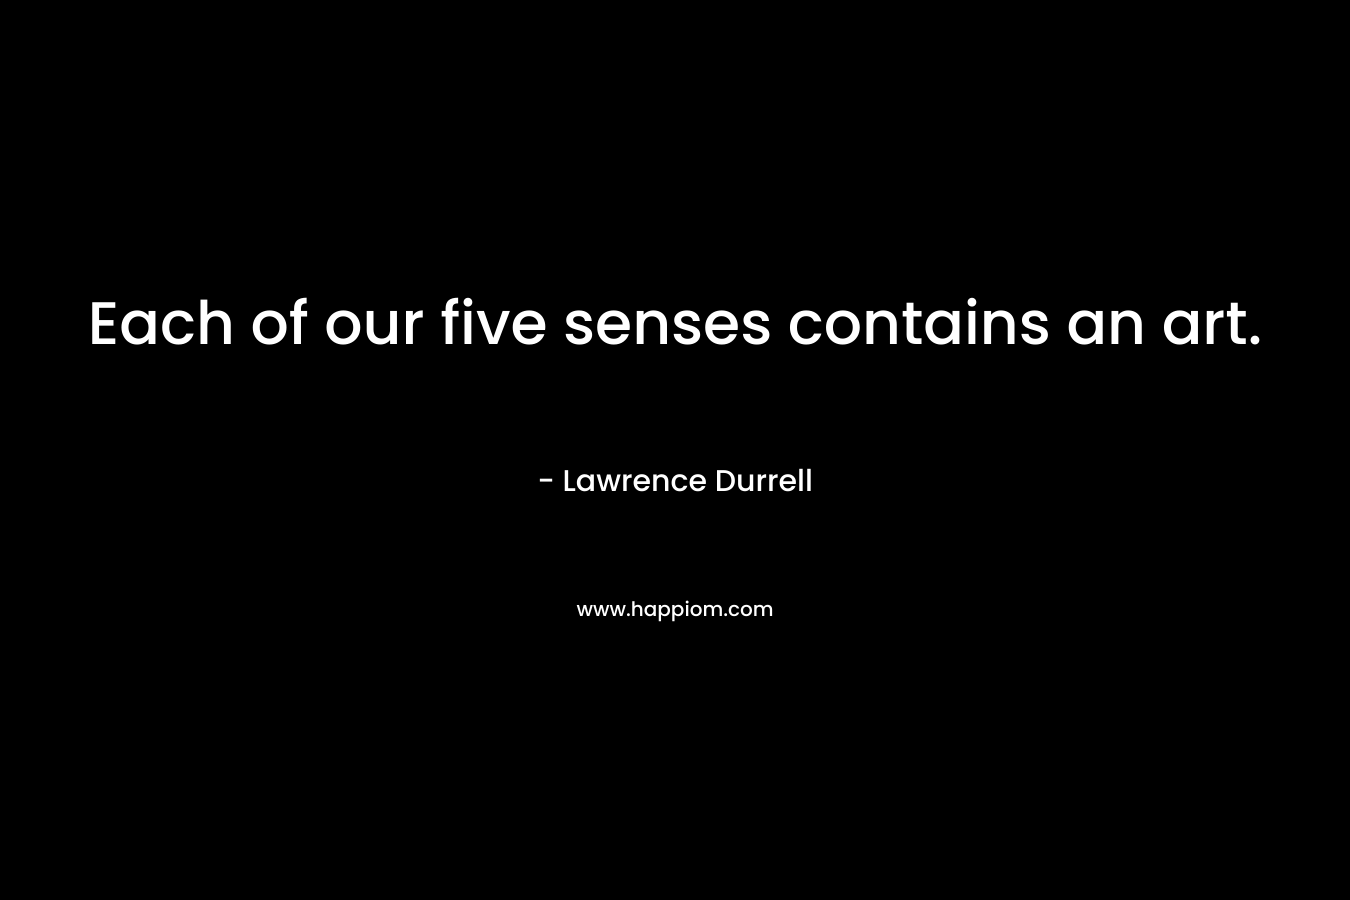 Each of our five senses contains an art.